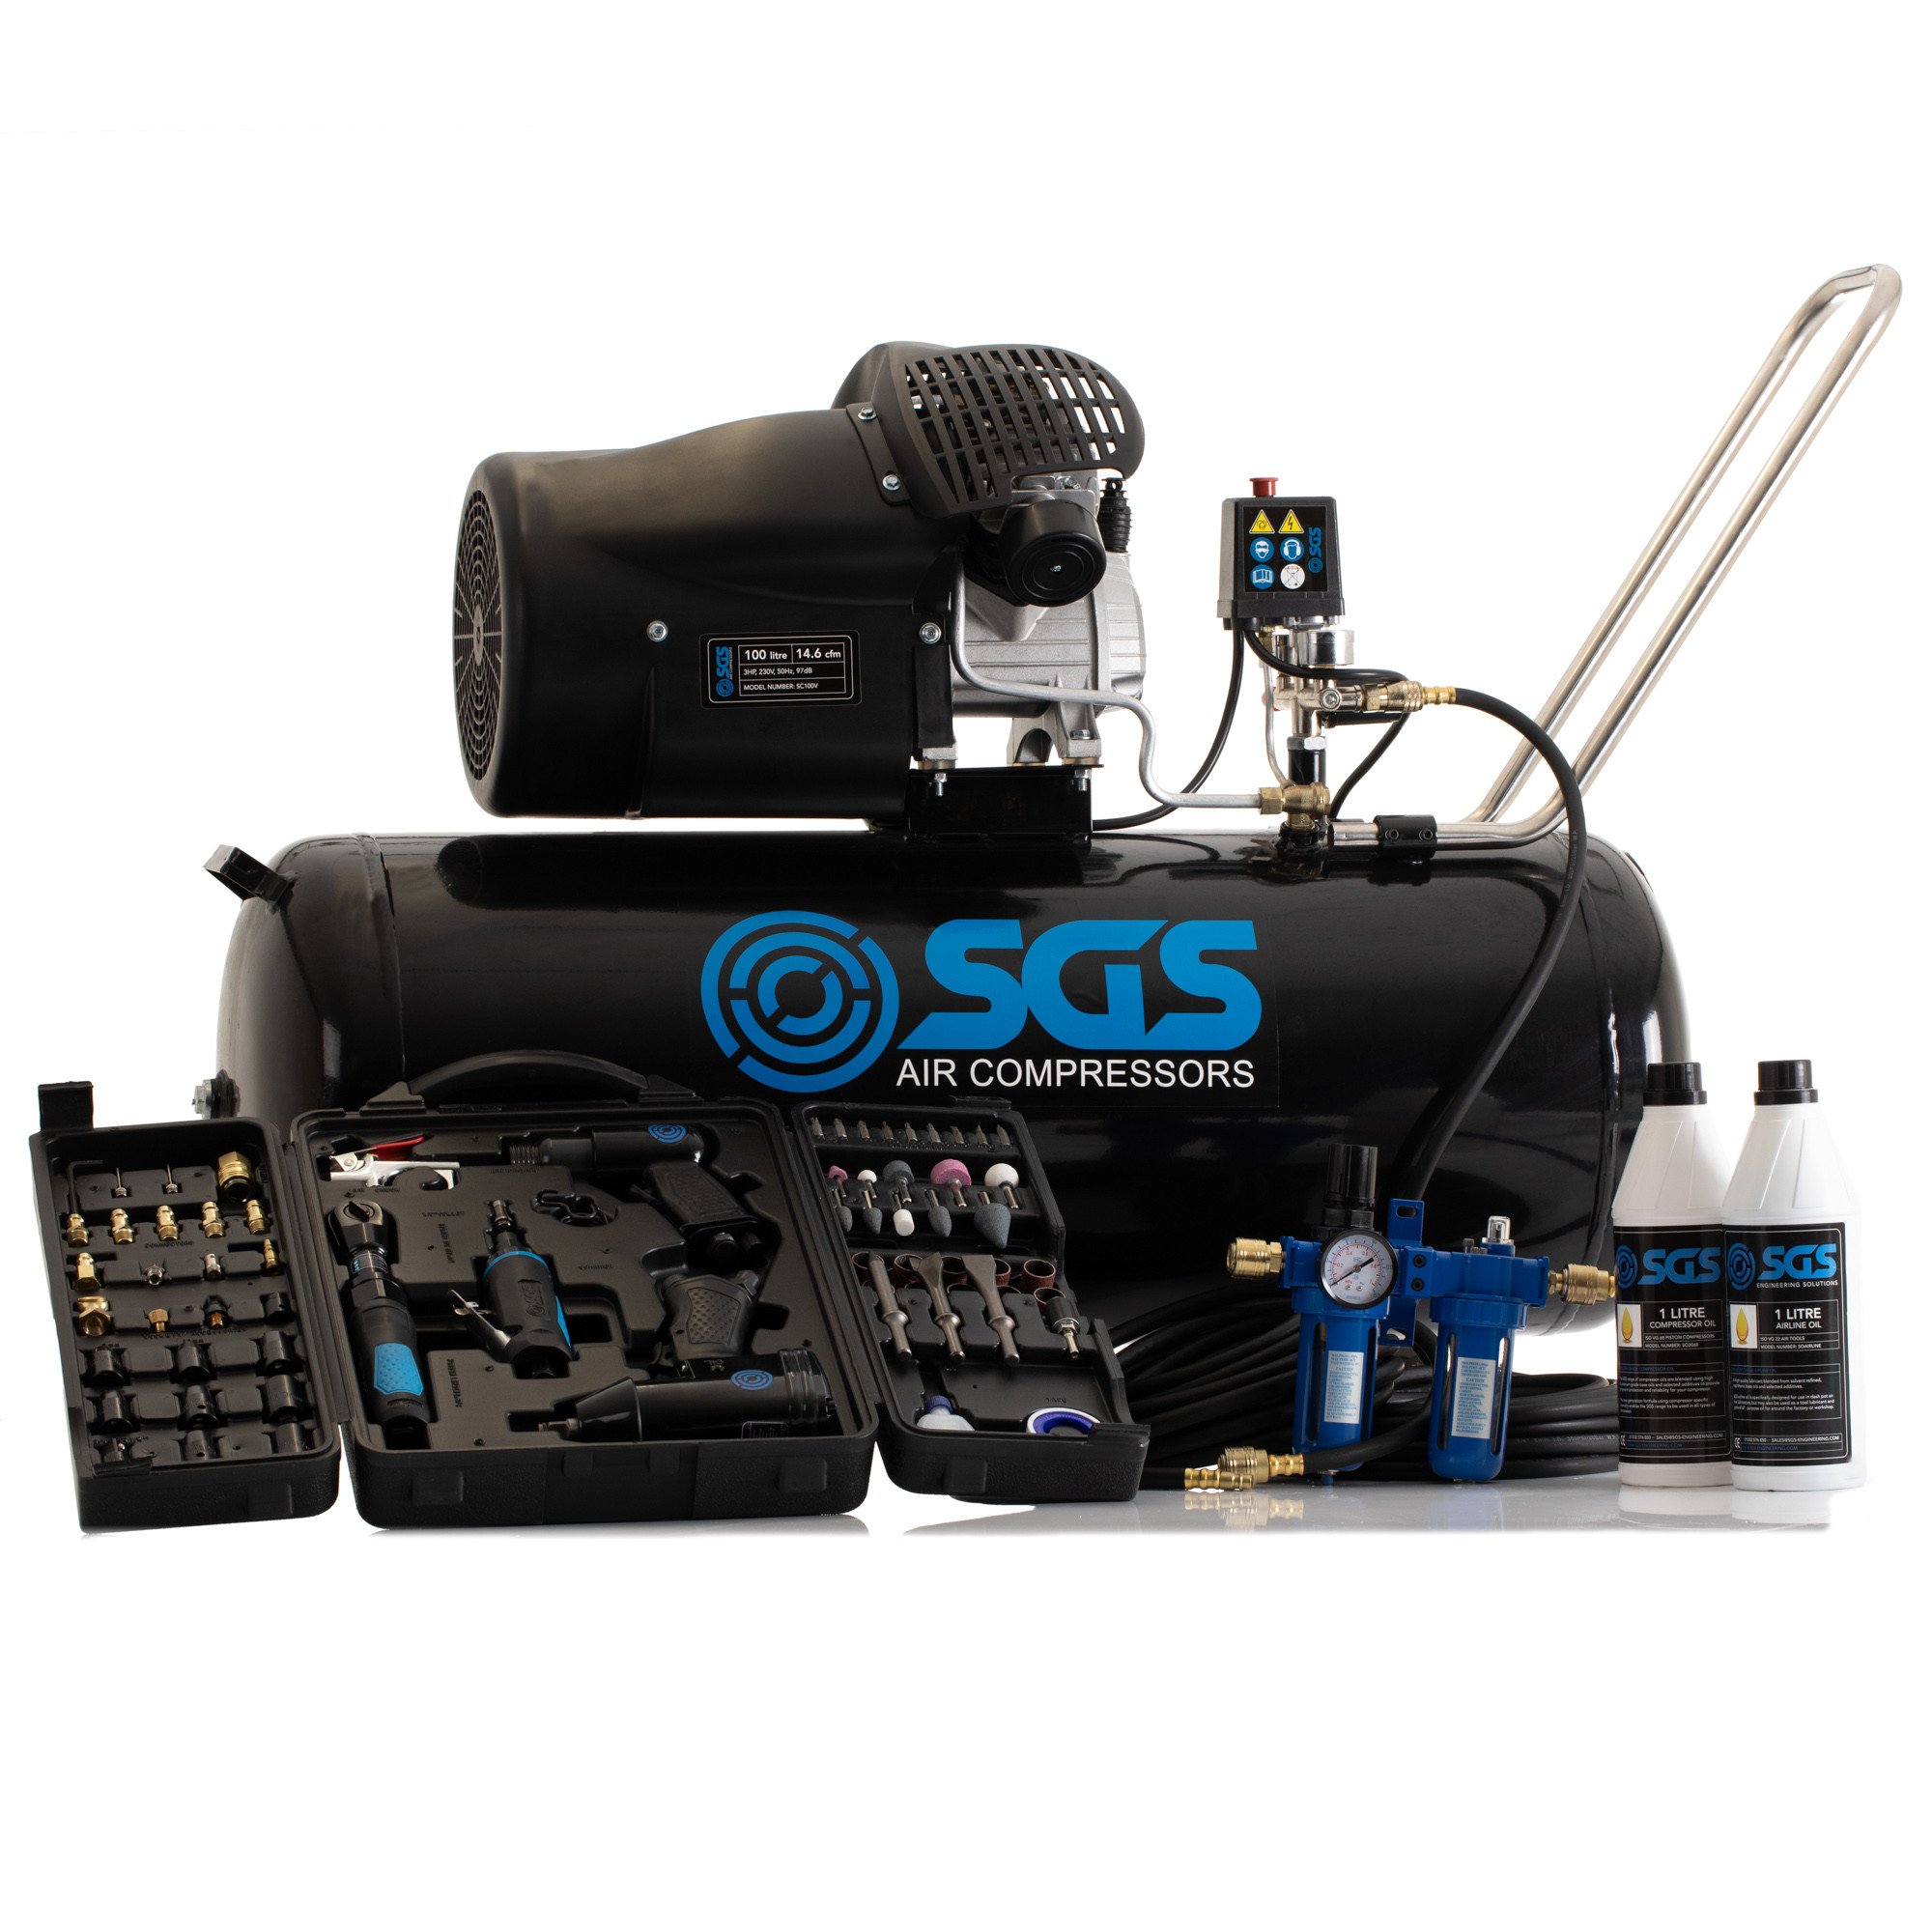 SGS 100升直接驱动空气压缩机和71个空气工具包- 14.6CFM 3.0HP 100L